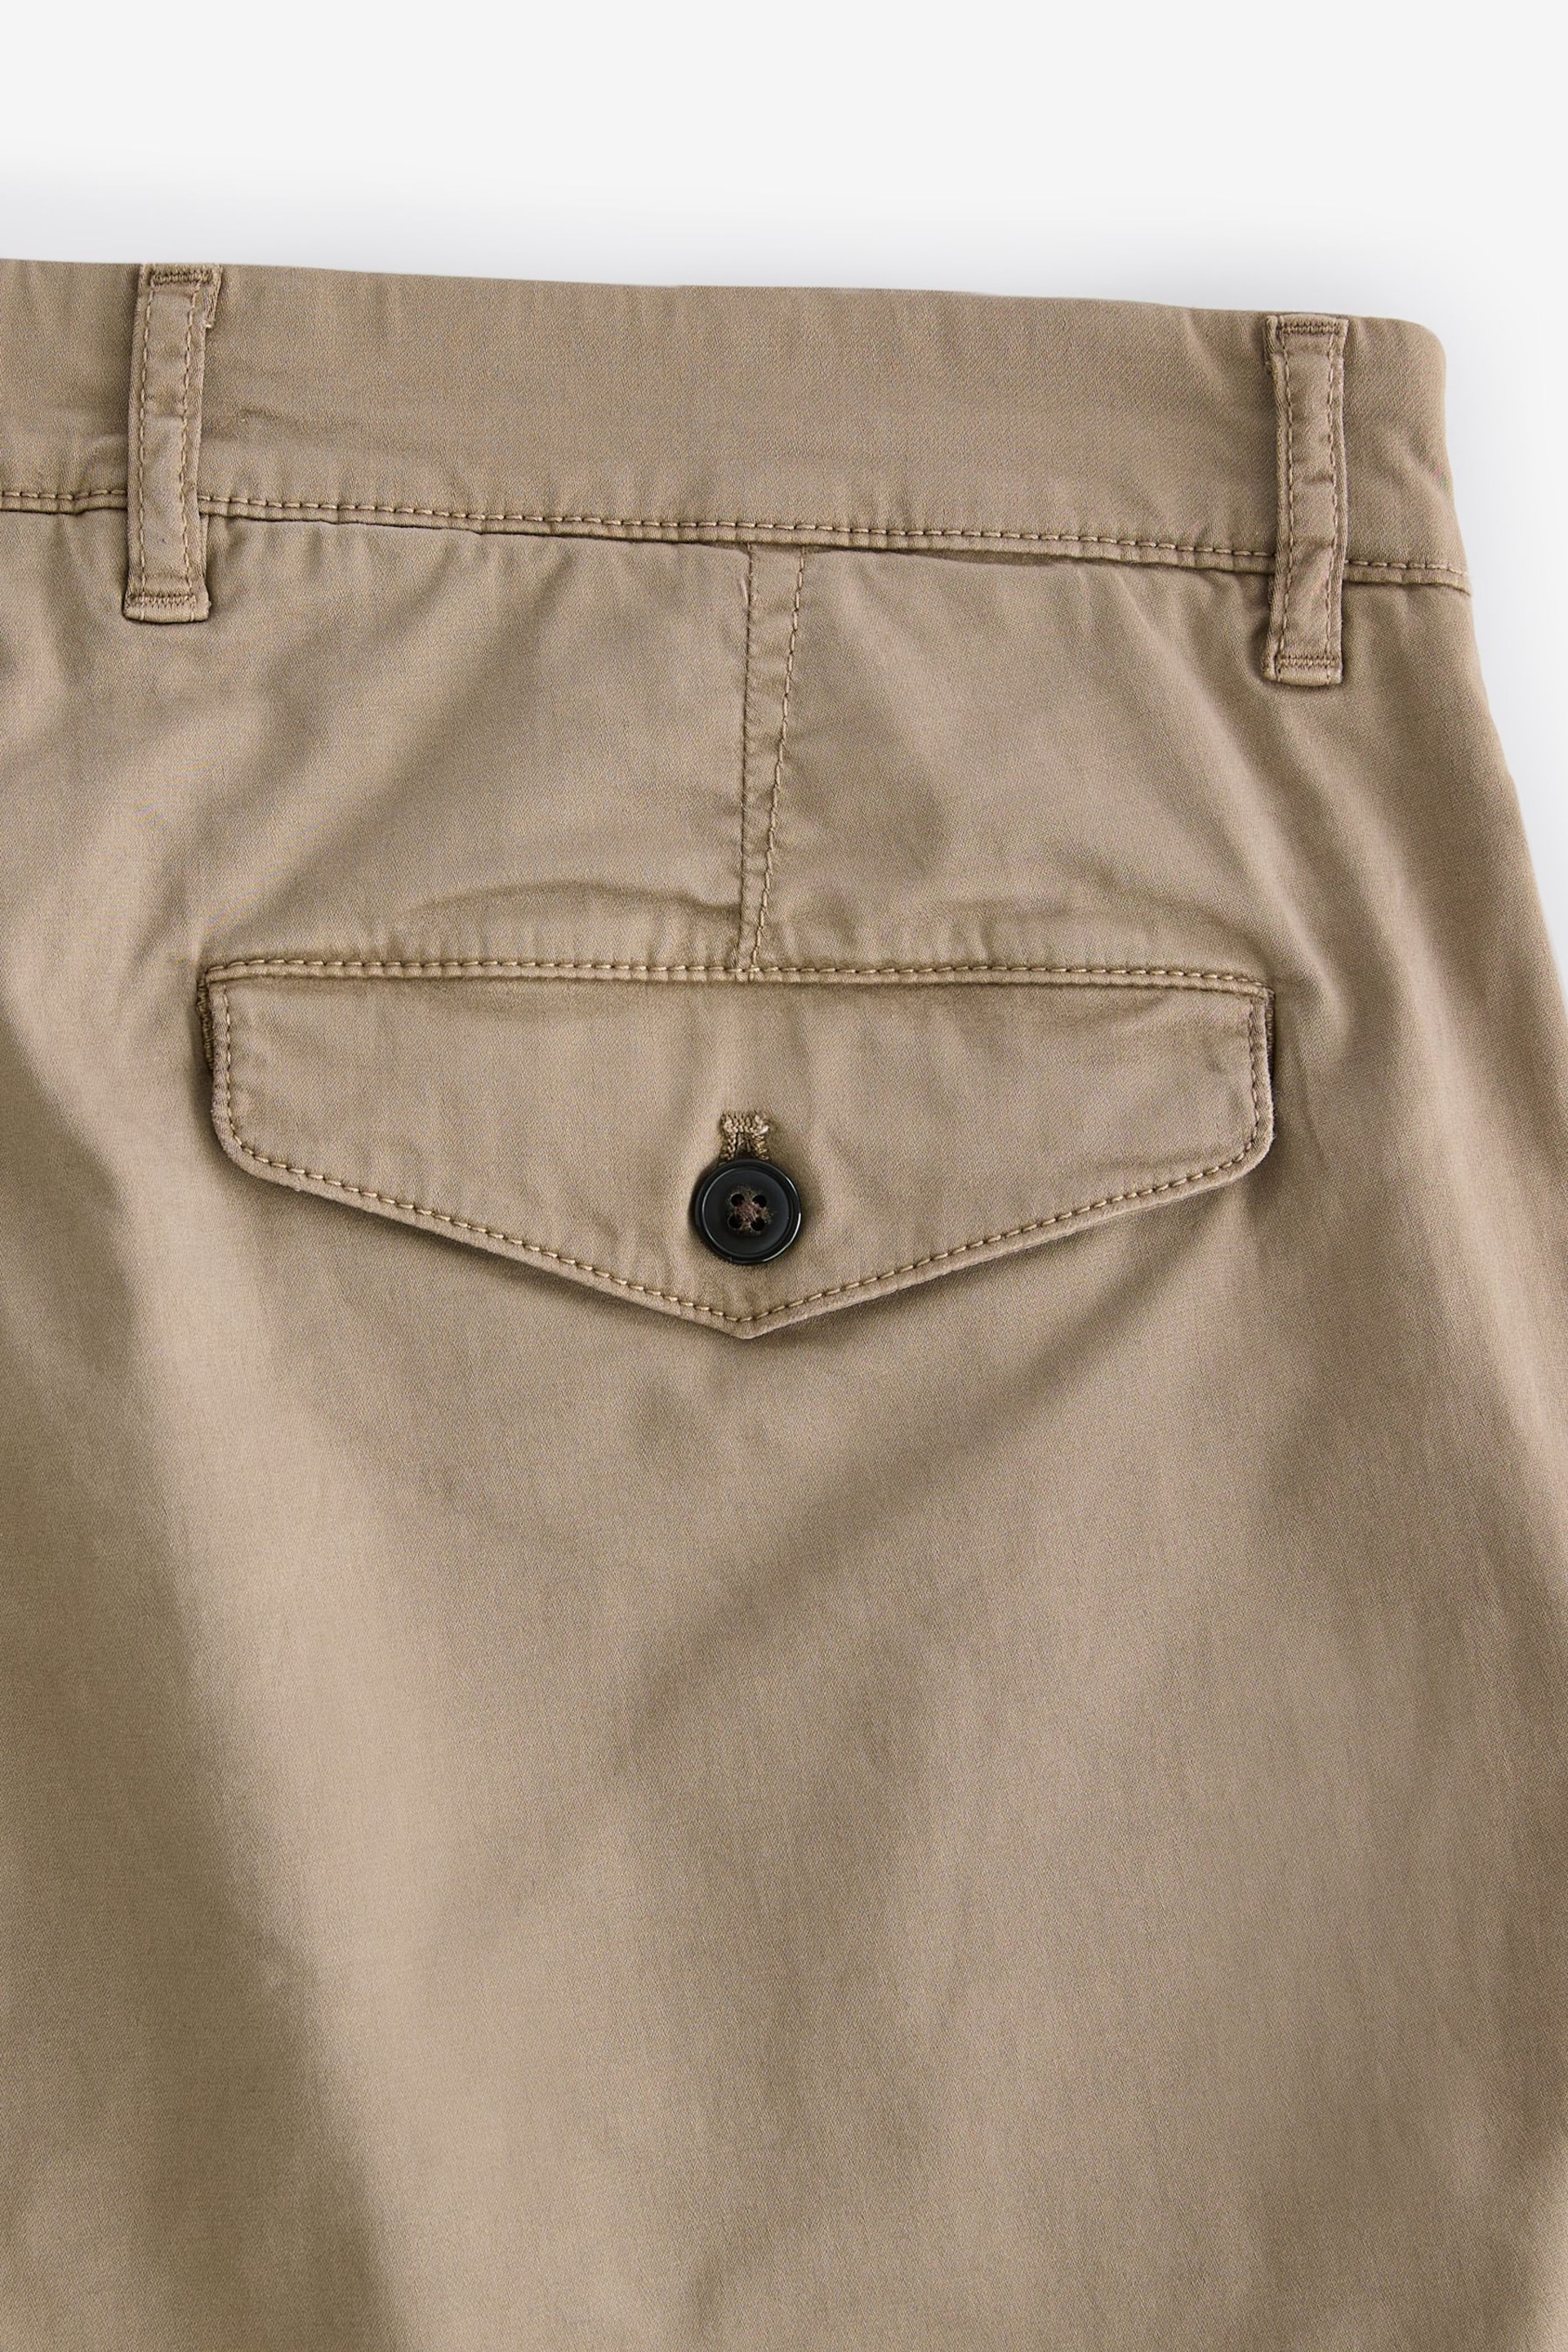 Stone Slim Fit Premium Laundered Stretch Chino Shorts - Image 8 of 10